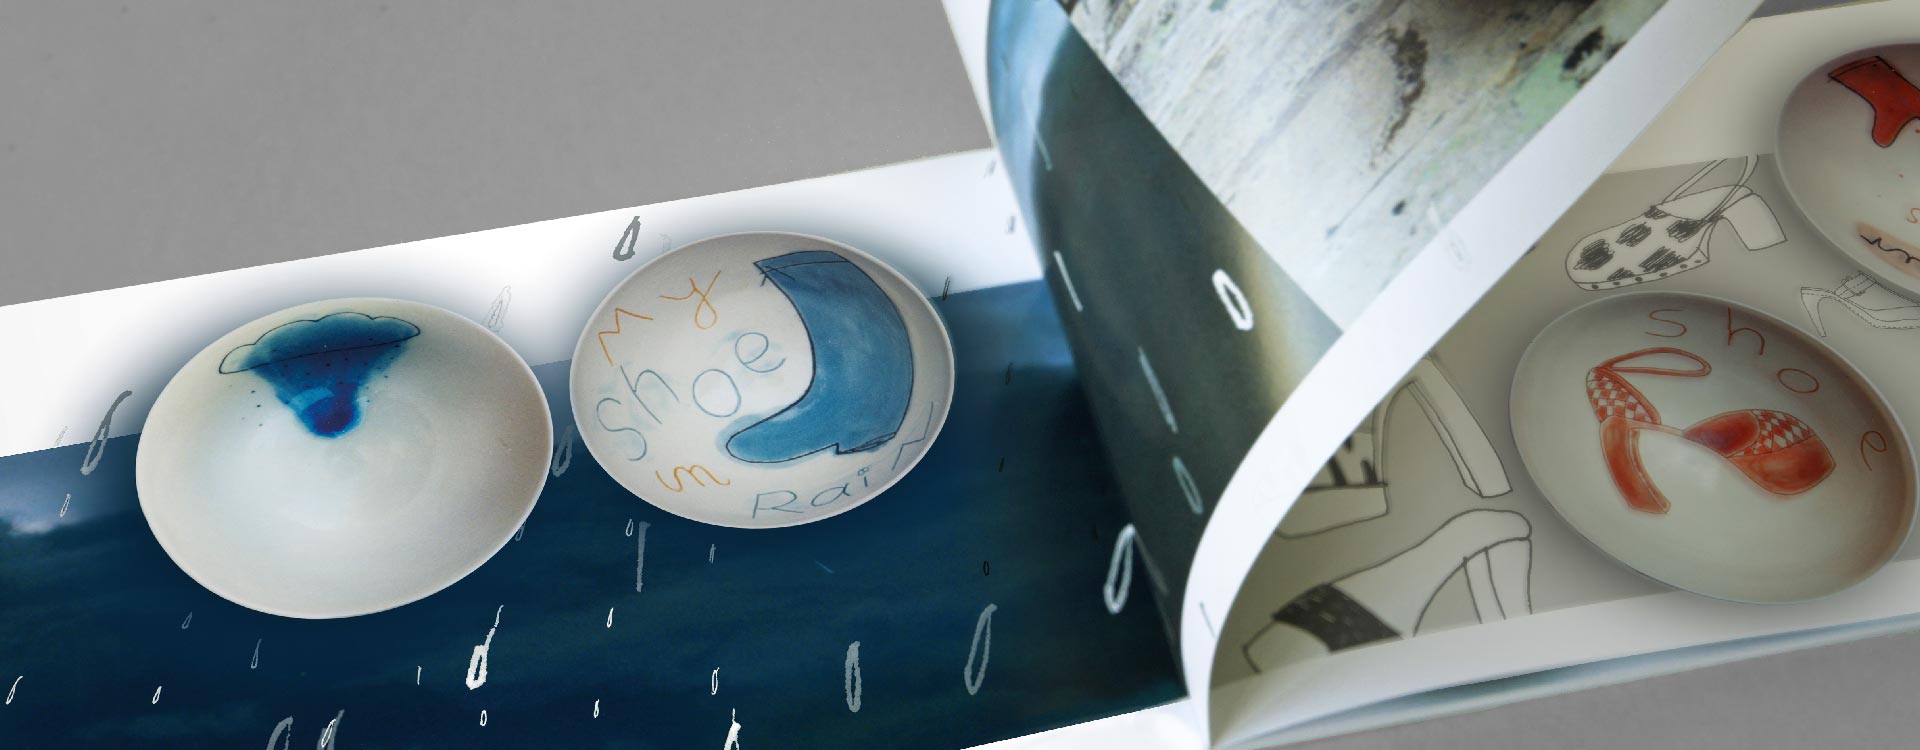 Catalogue Stefanie Neumann, Ceramics and Graphics; Design: Kattrin Richter | Graphic Design Studio